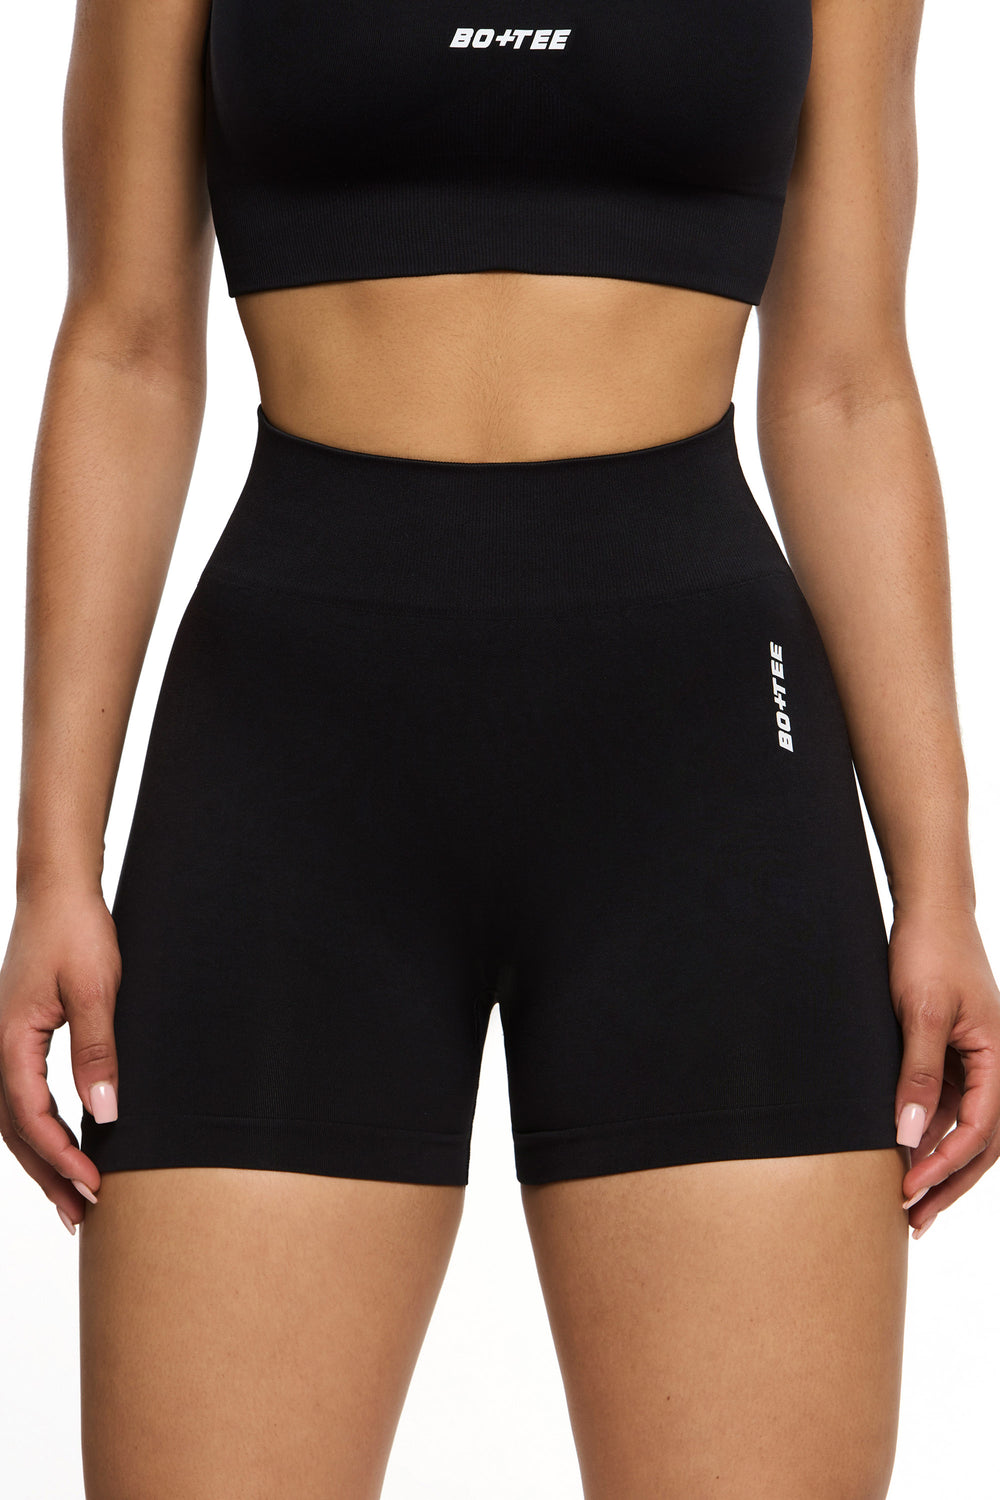 Invigorate - Seamless High Waist Mini Shorts in Black